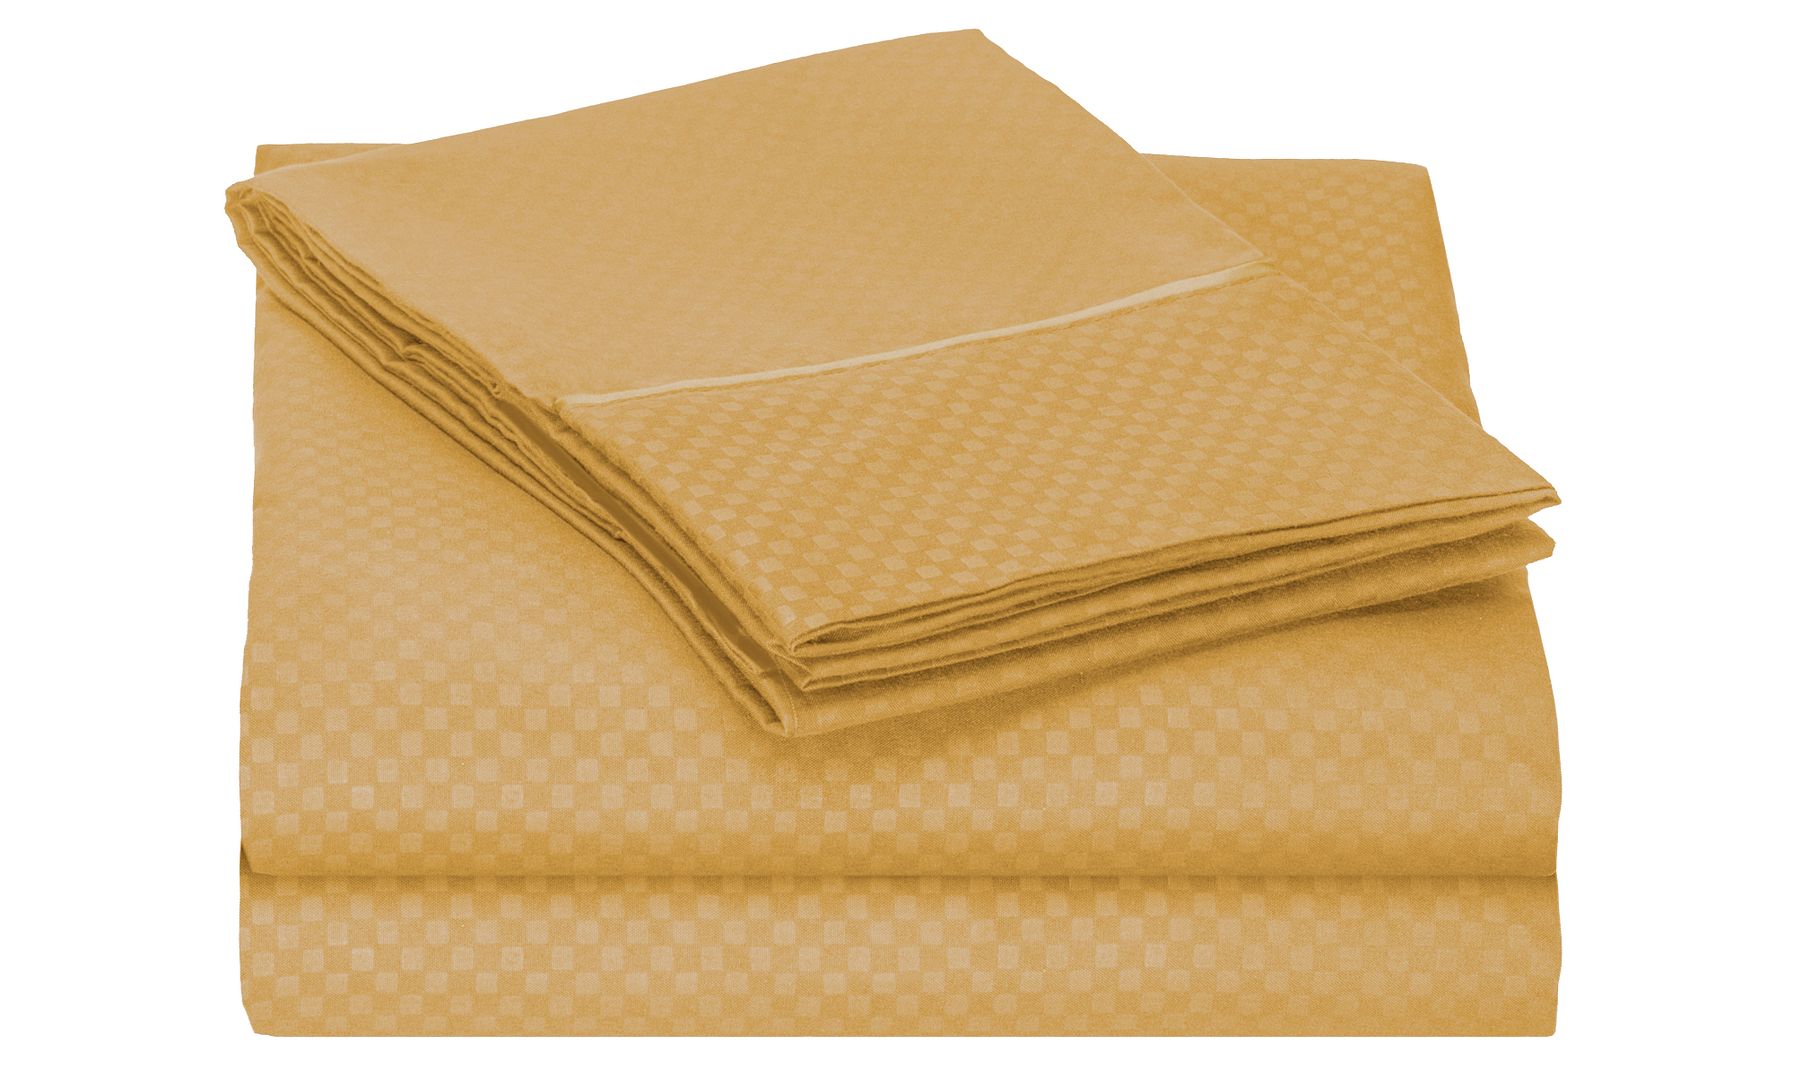 Clara Clark 1800 Series Checkerboard Bed Sheet Set - King Size, Camel